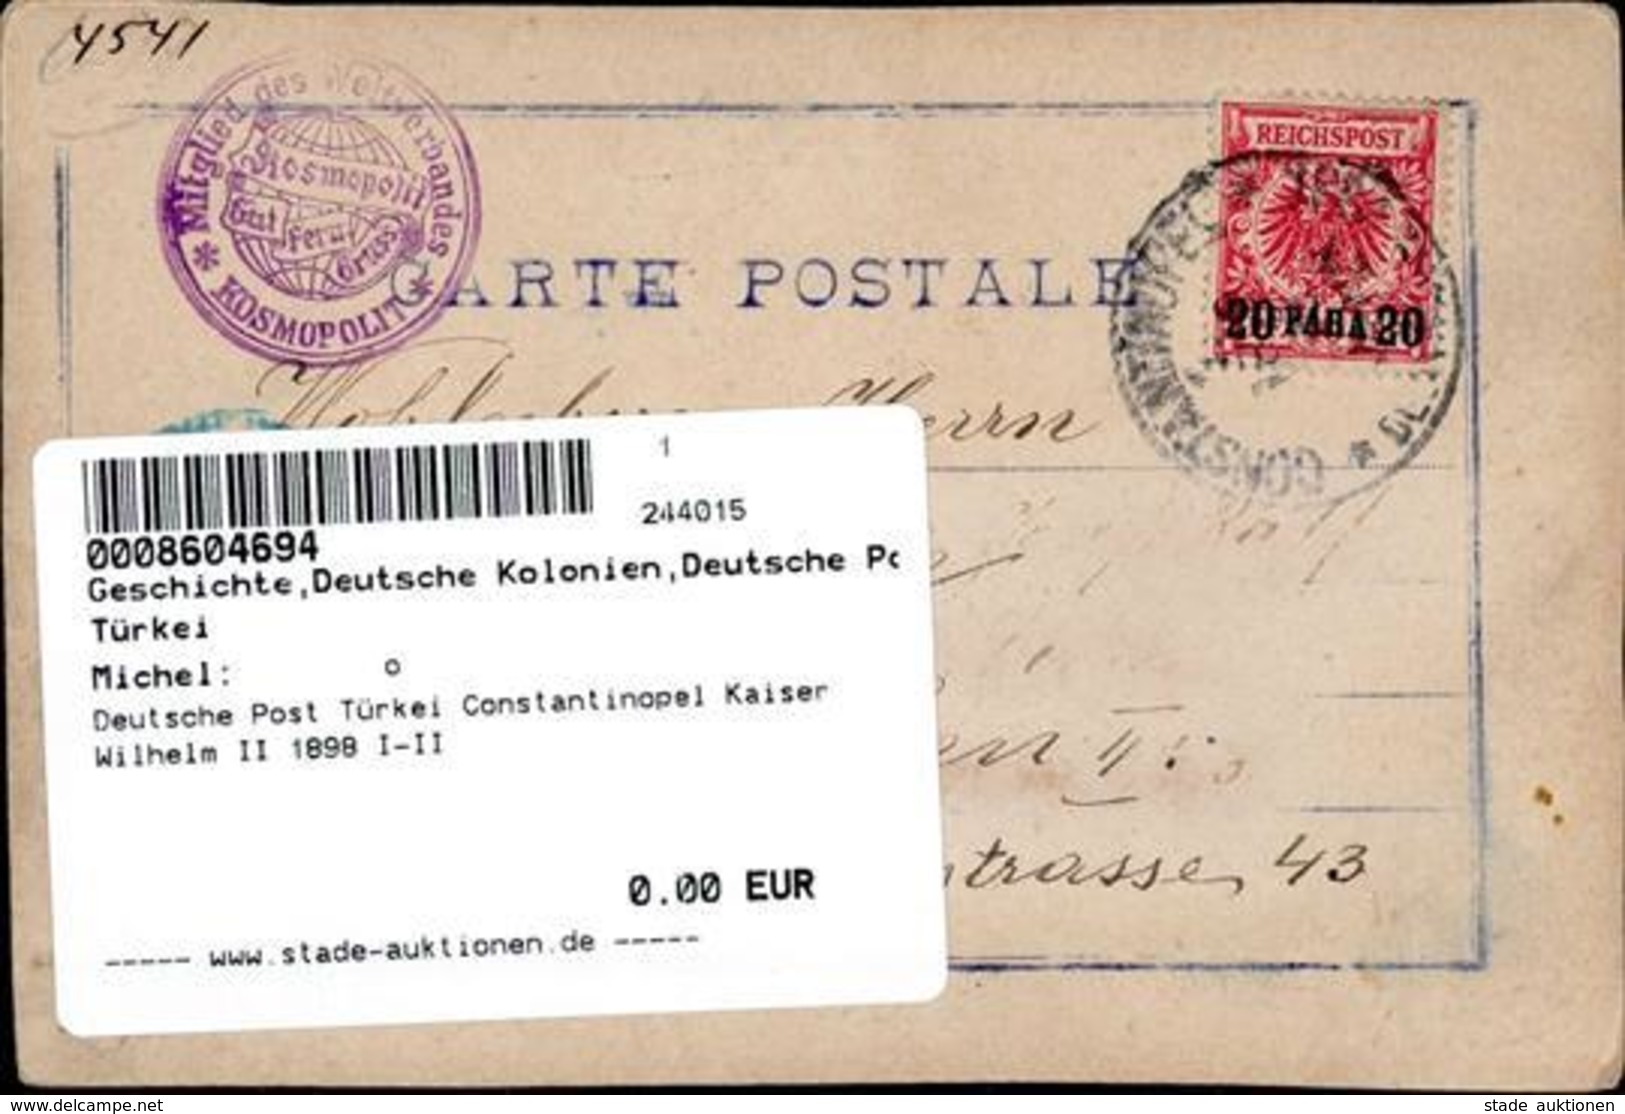 Deutsche Post Türkei Constantinopel Kaiser Wilhelm II 1898 I-II - History